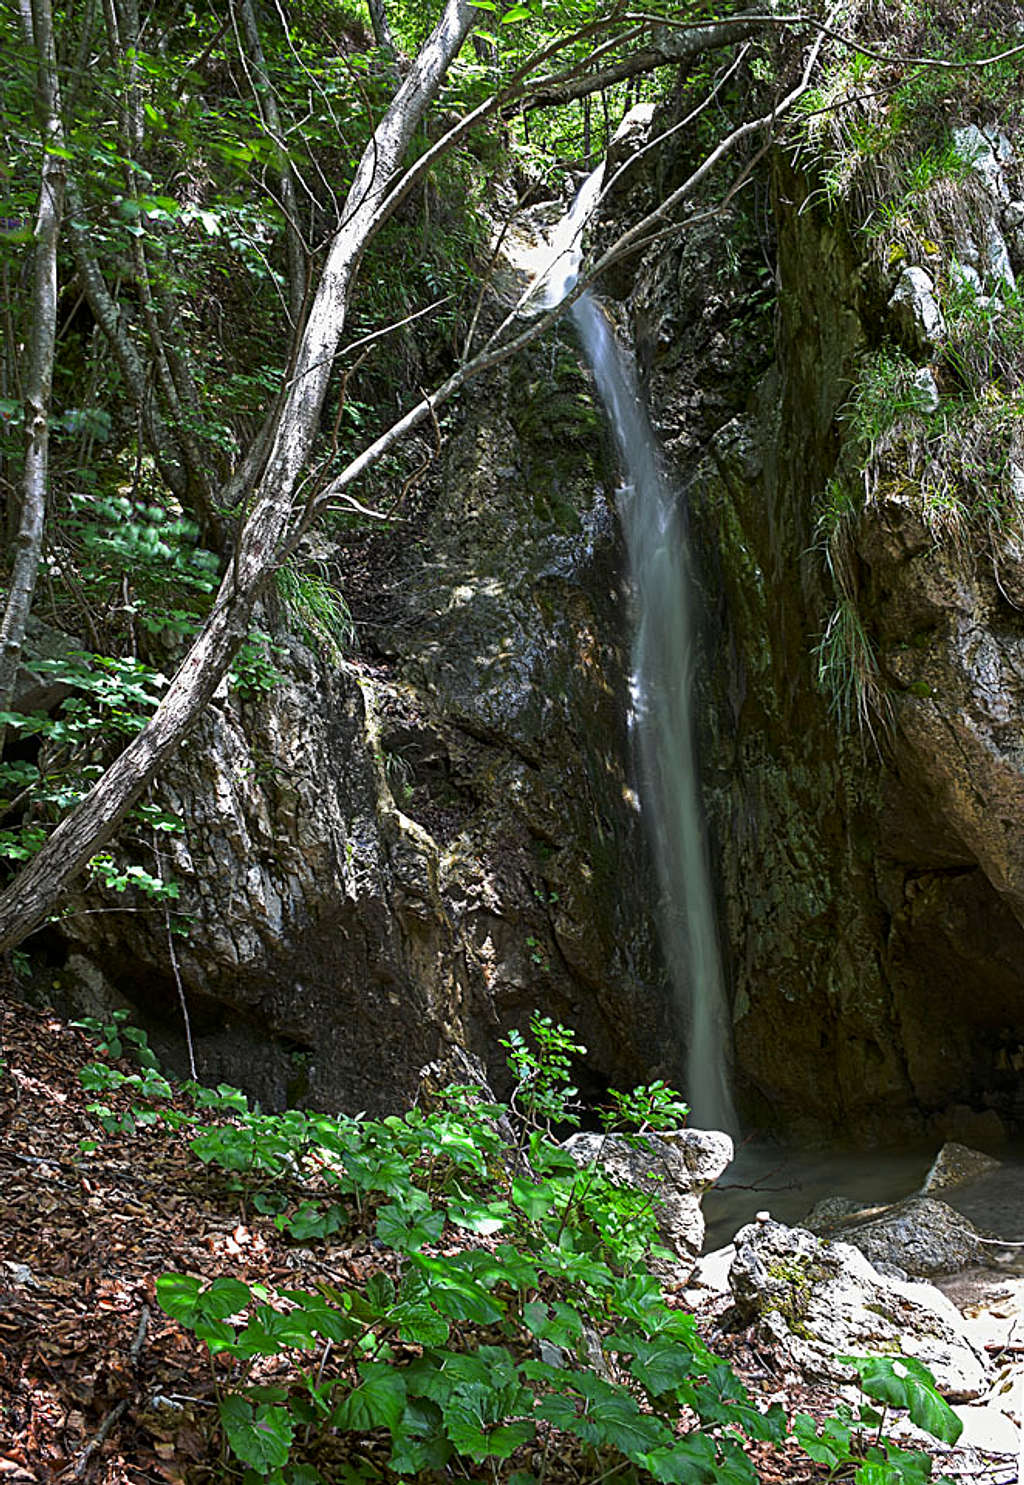 The upper waterfall on the Blatnica creek